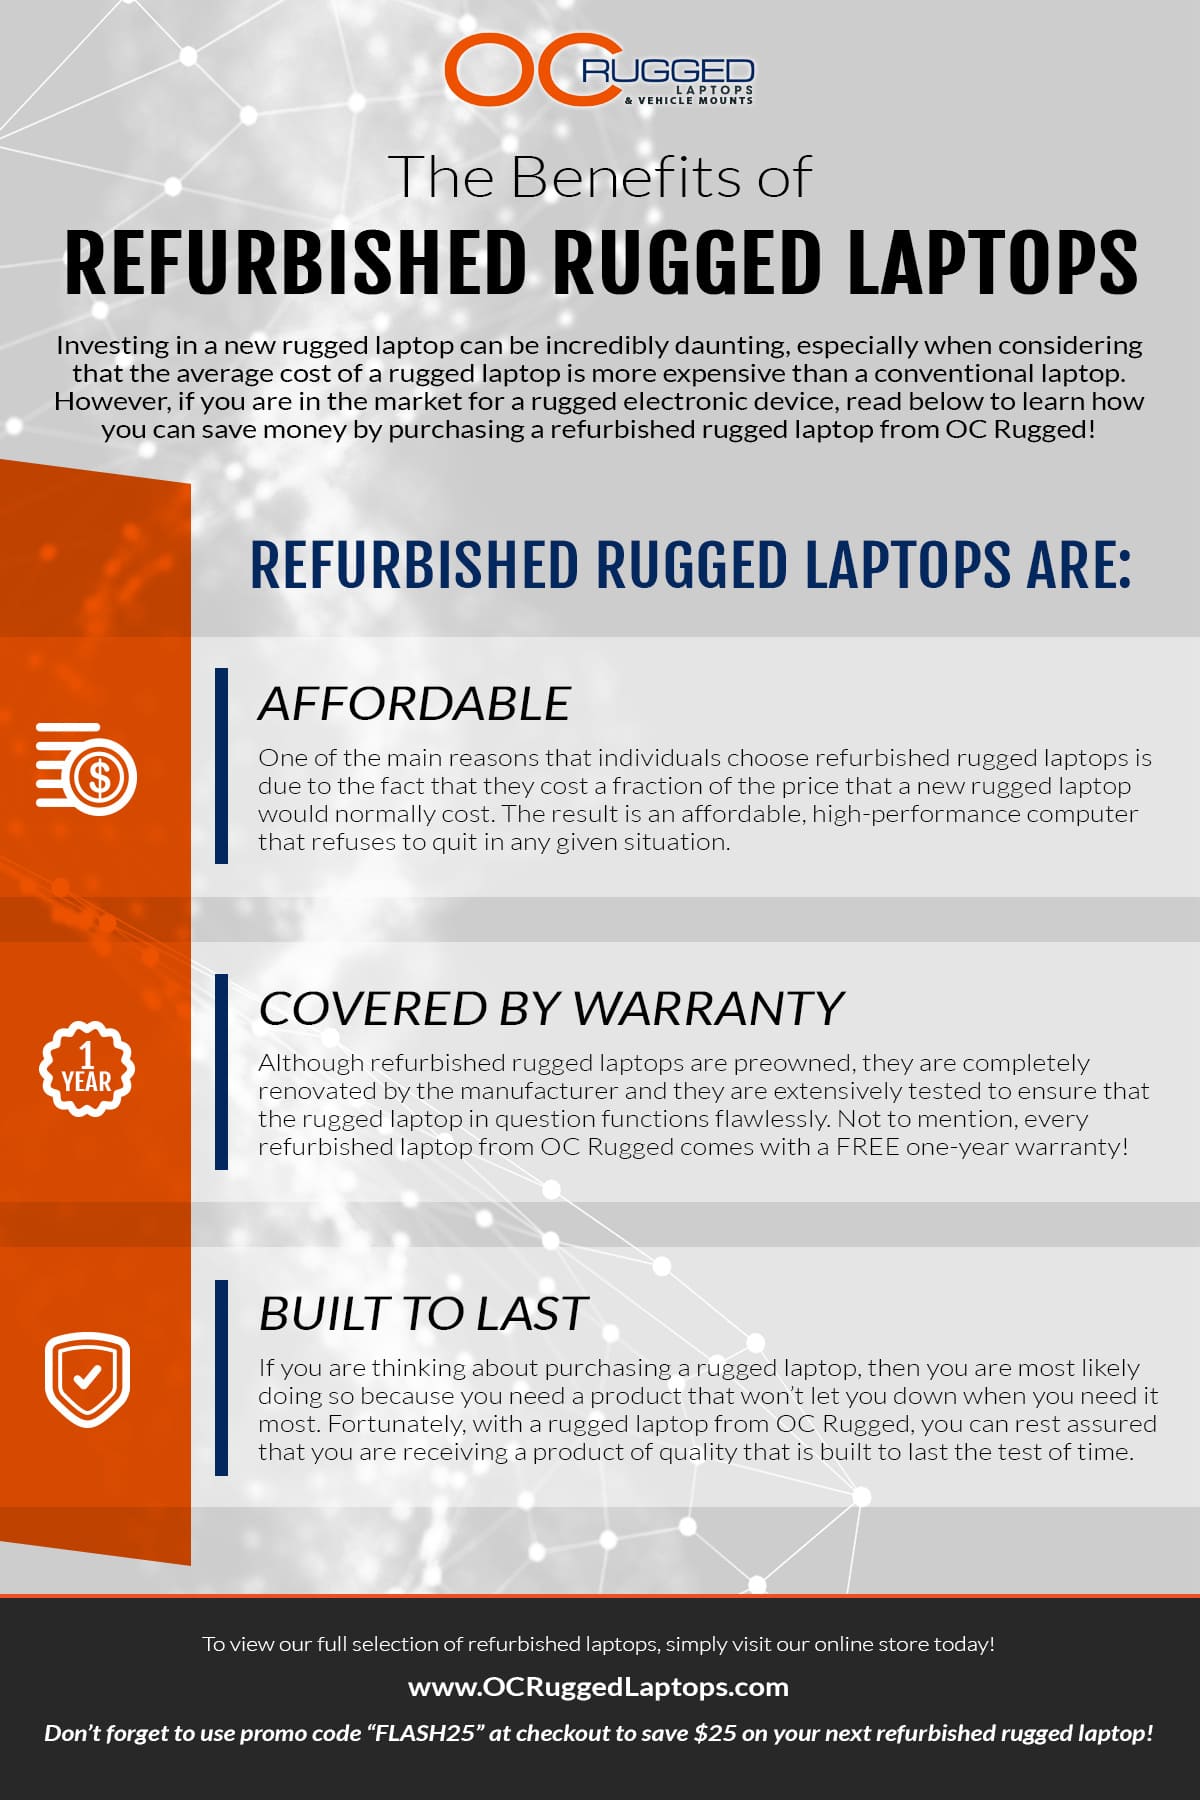 Refurbished rugged laptops